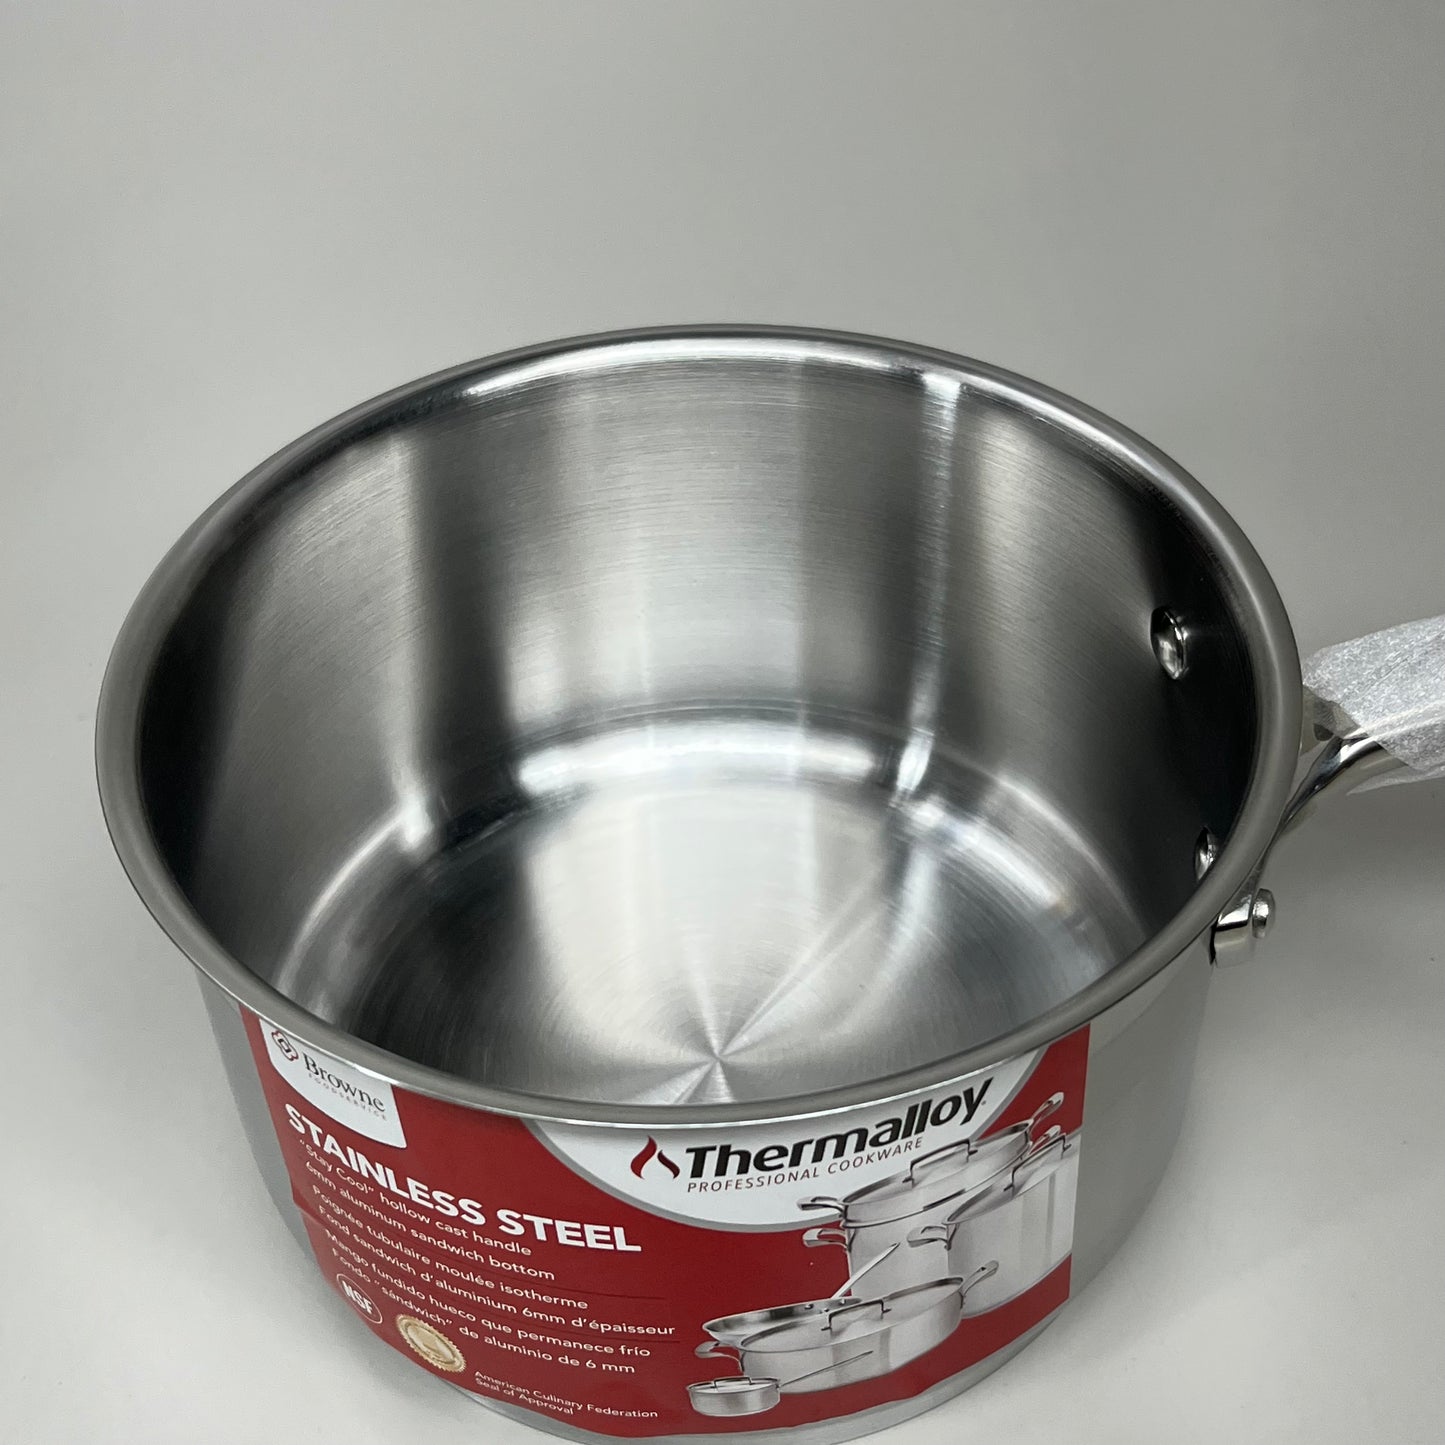 BROWNE Thermalloy Deep Sauce Pan w/ ergonomic handle 5724032 (New)